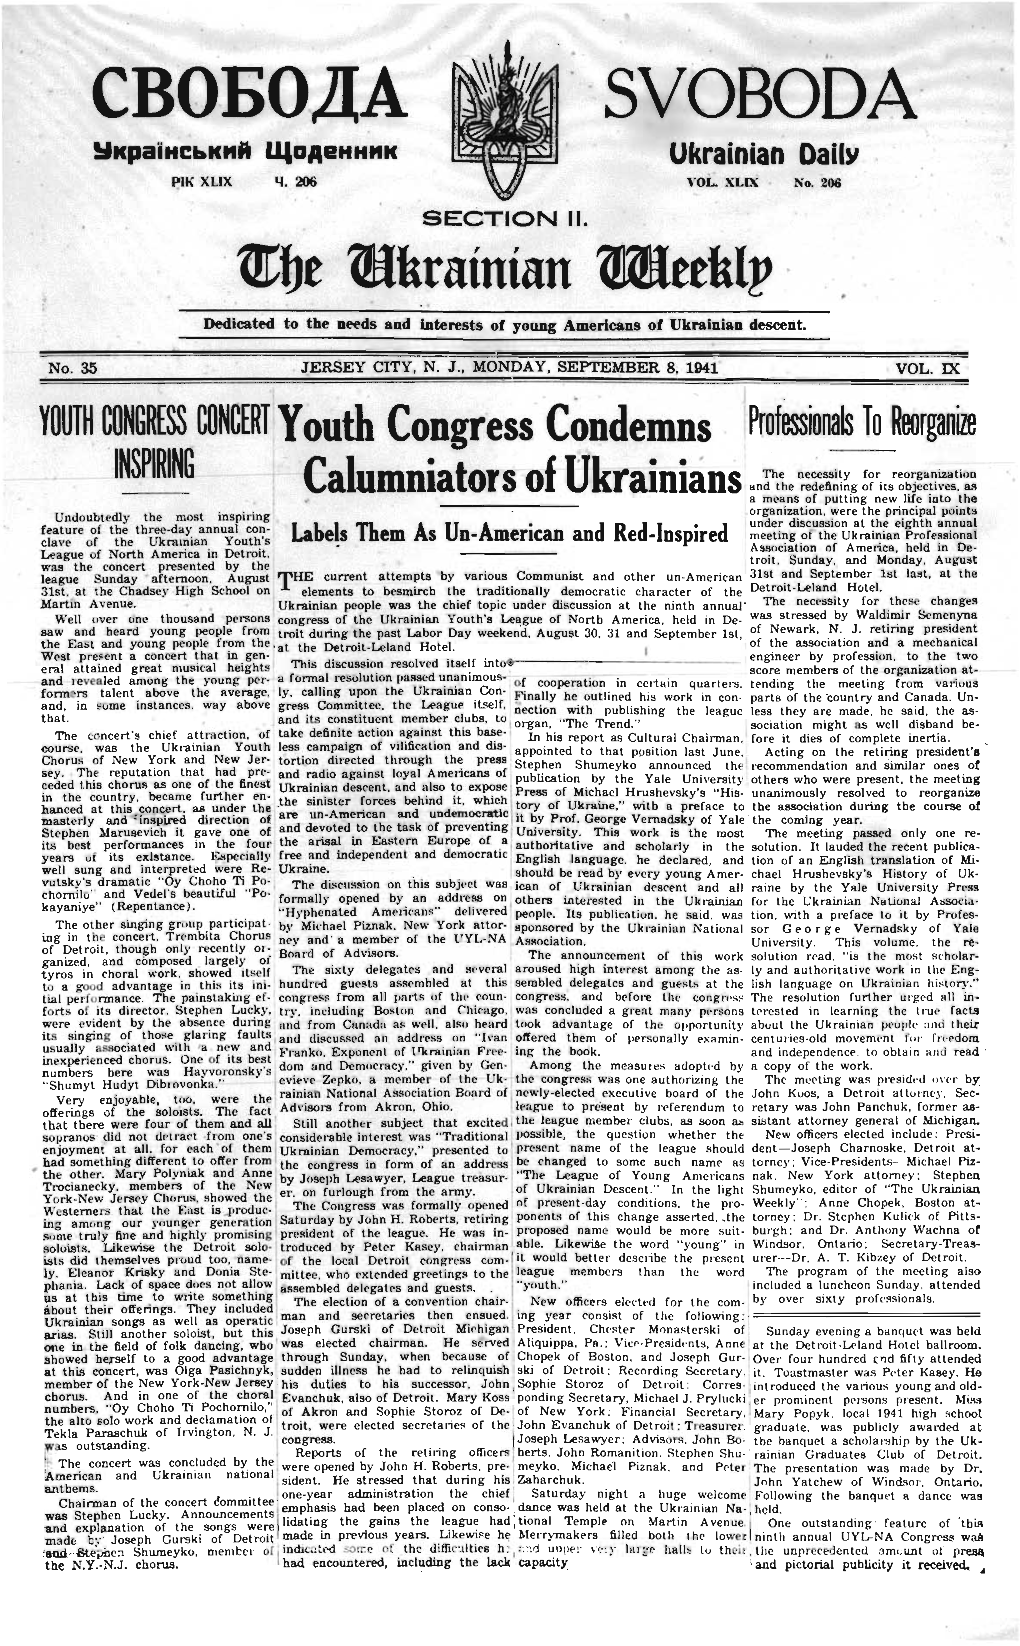 The Ukrainian Weekly 1941, No.35